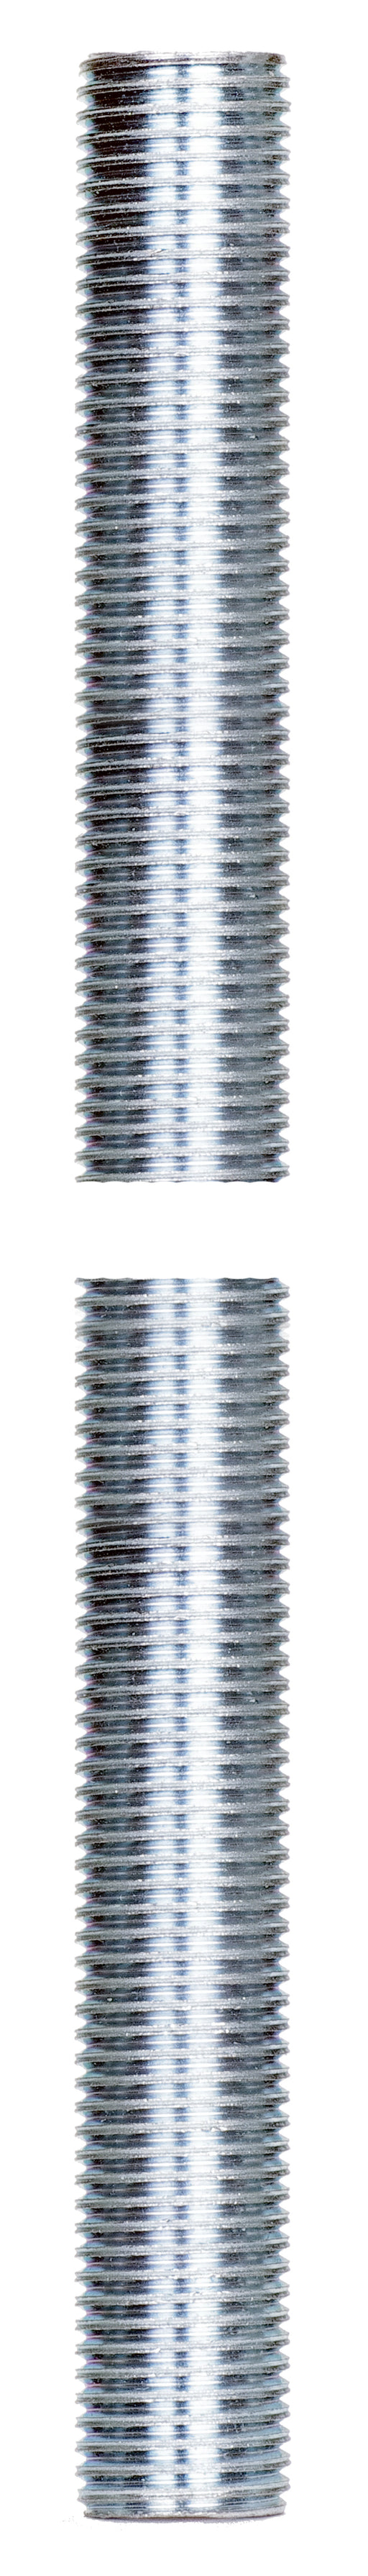 SATCO/NUVO 1/4 IP Steel Nipple Zinc Plated 72 Inch Length 1/2 Inch Wide (80-1938)